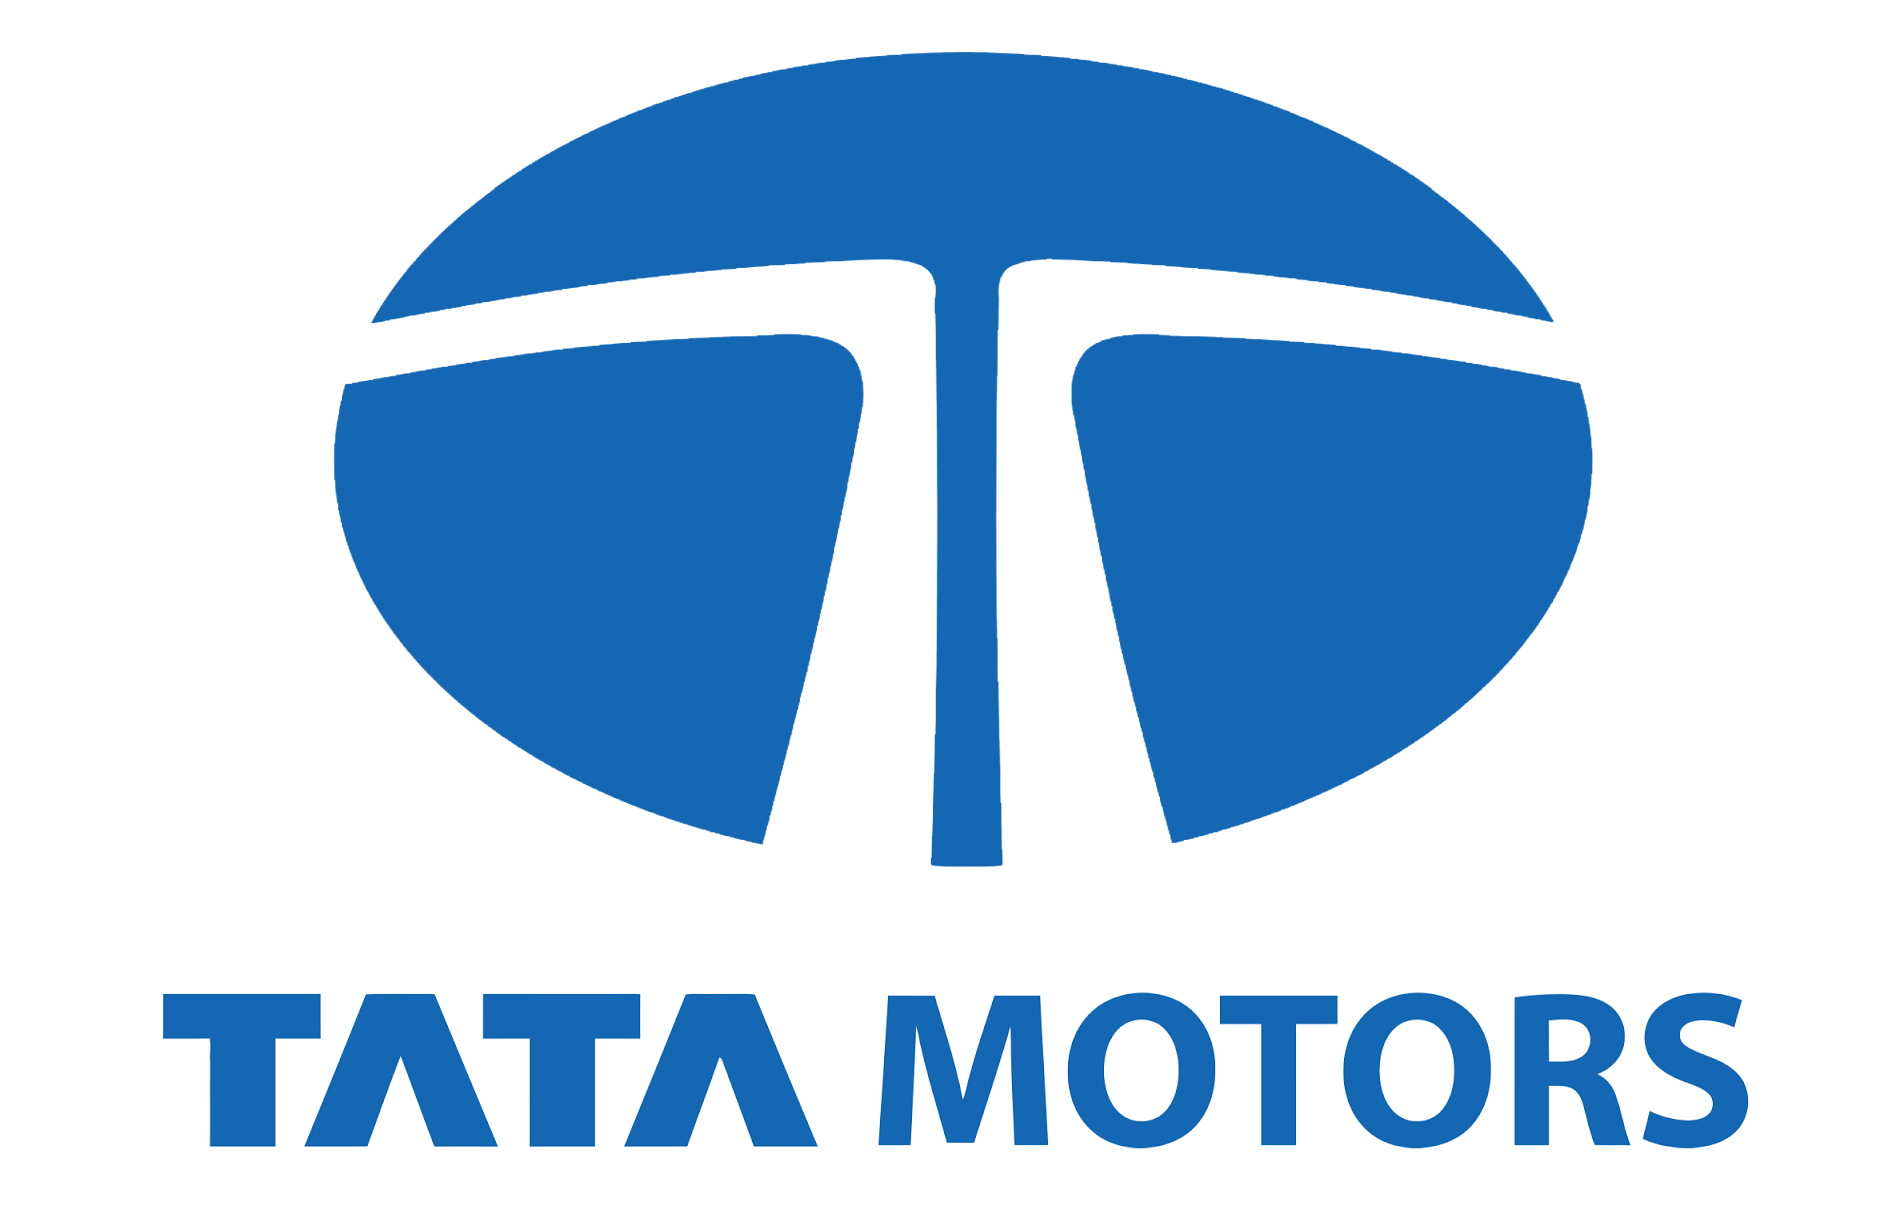 Tata Motors Cars Showroom - Select Cars|Show Room|Automotive